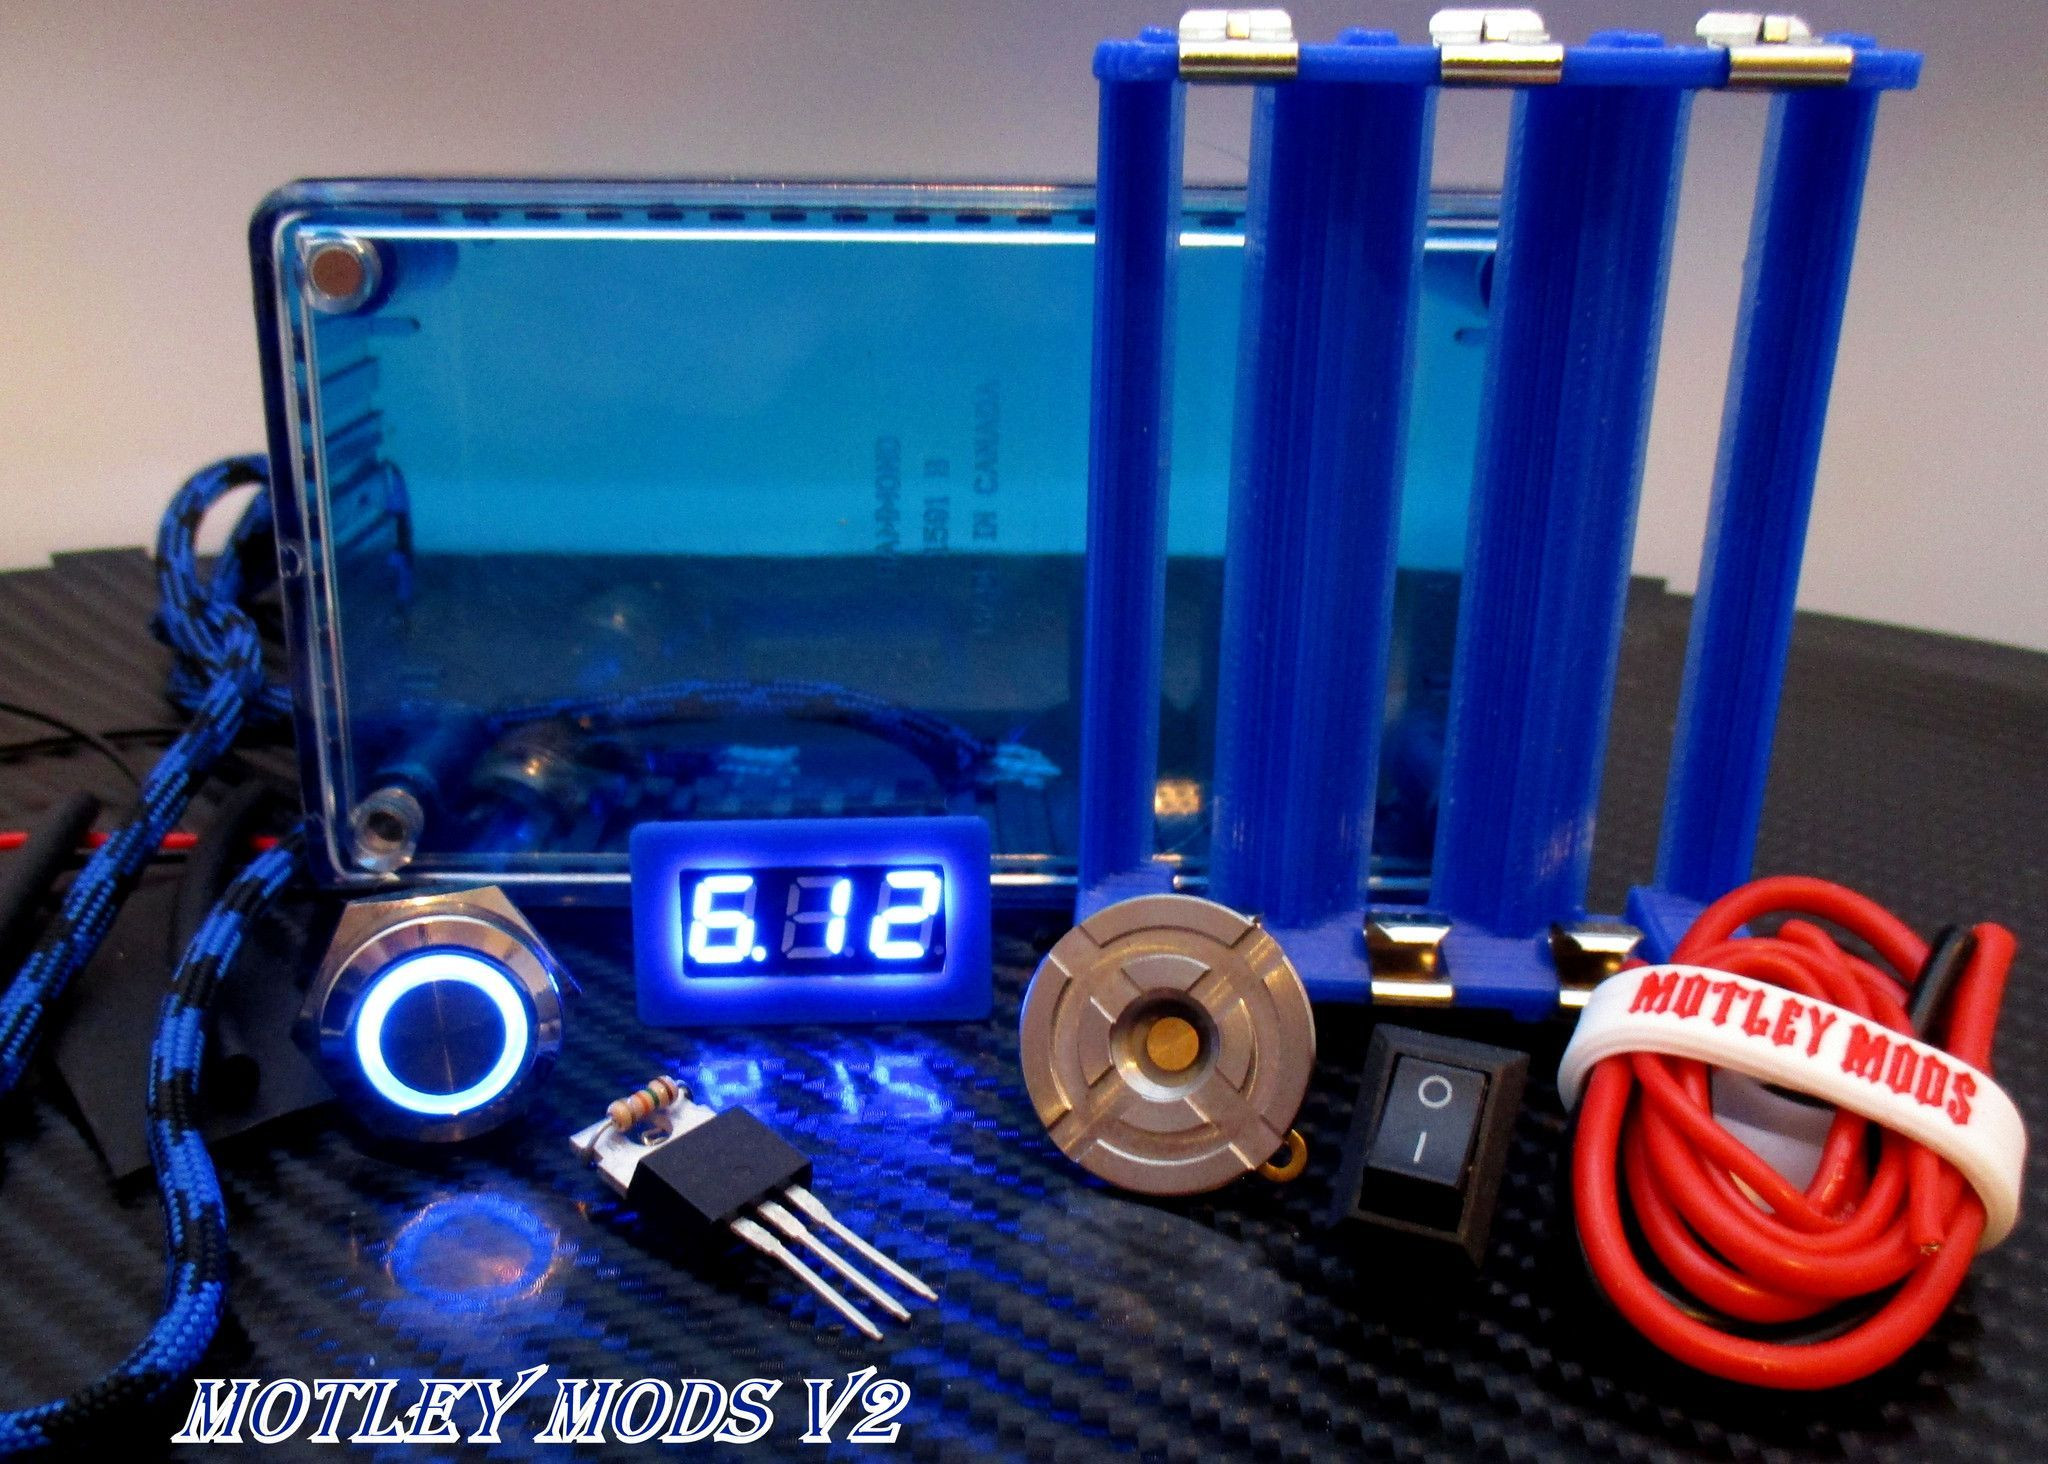 Best ideas about DIY Vape Mods Kits
. Save or Pin Box Mod kit Blue Clear Lid VAPE Mods Now.